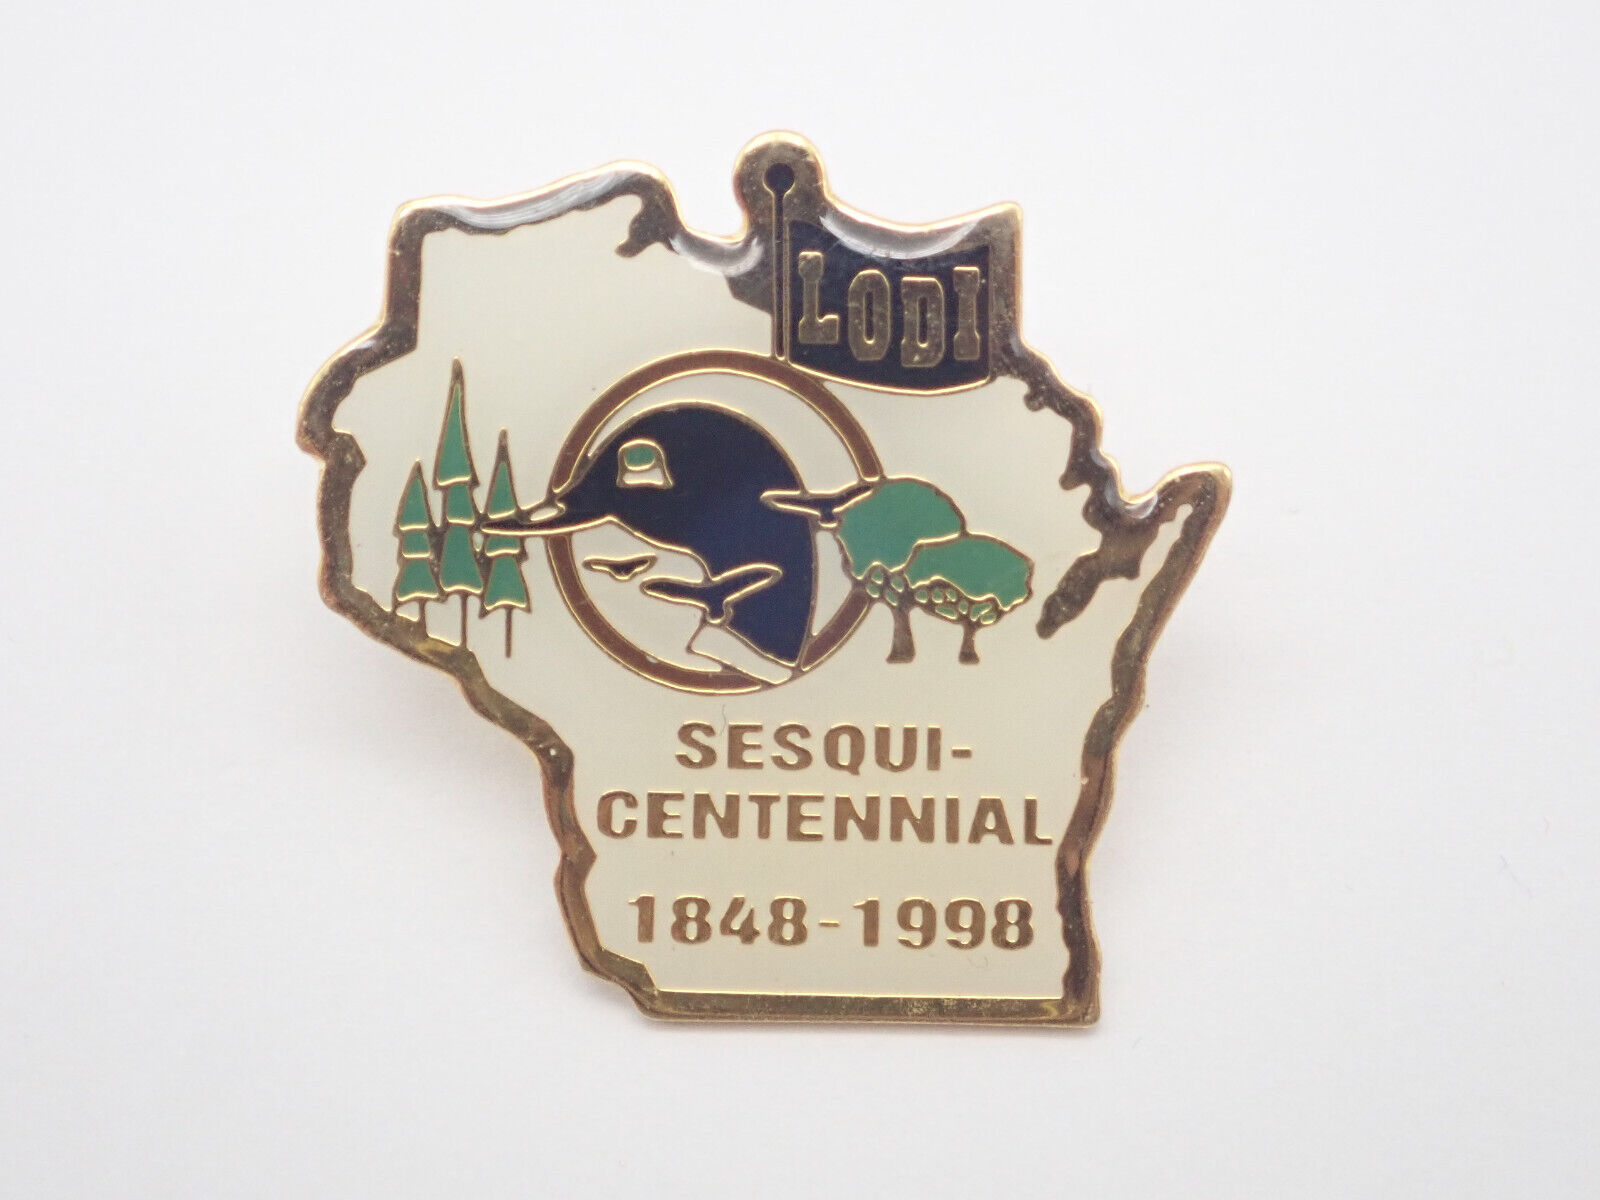 Lodi Wisconsin Sesquicentennial  1848-1998 Vintage Lapel Pin